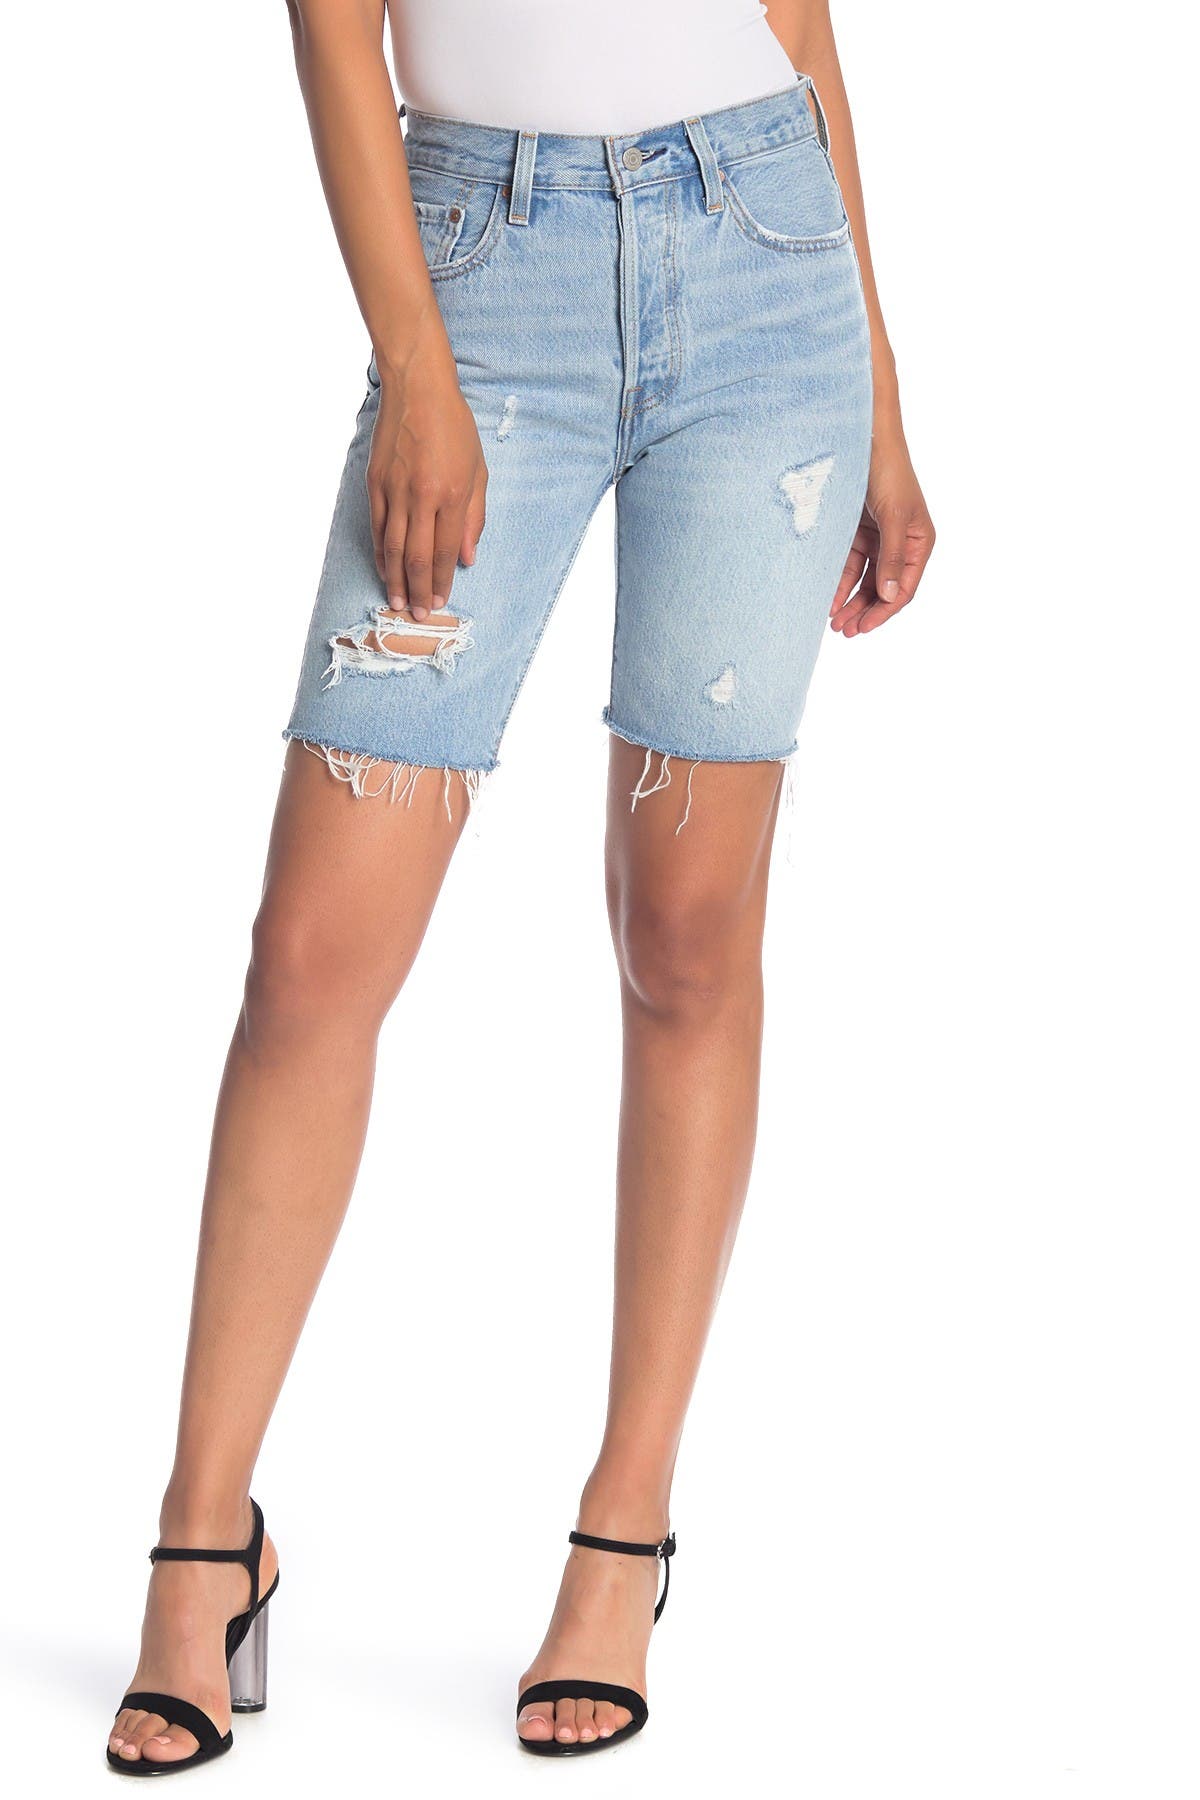 levi's 501 slouch shorts